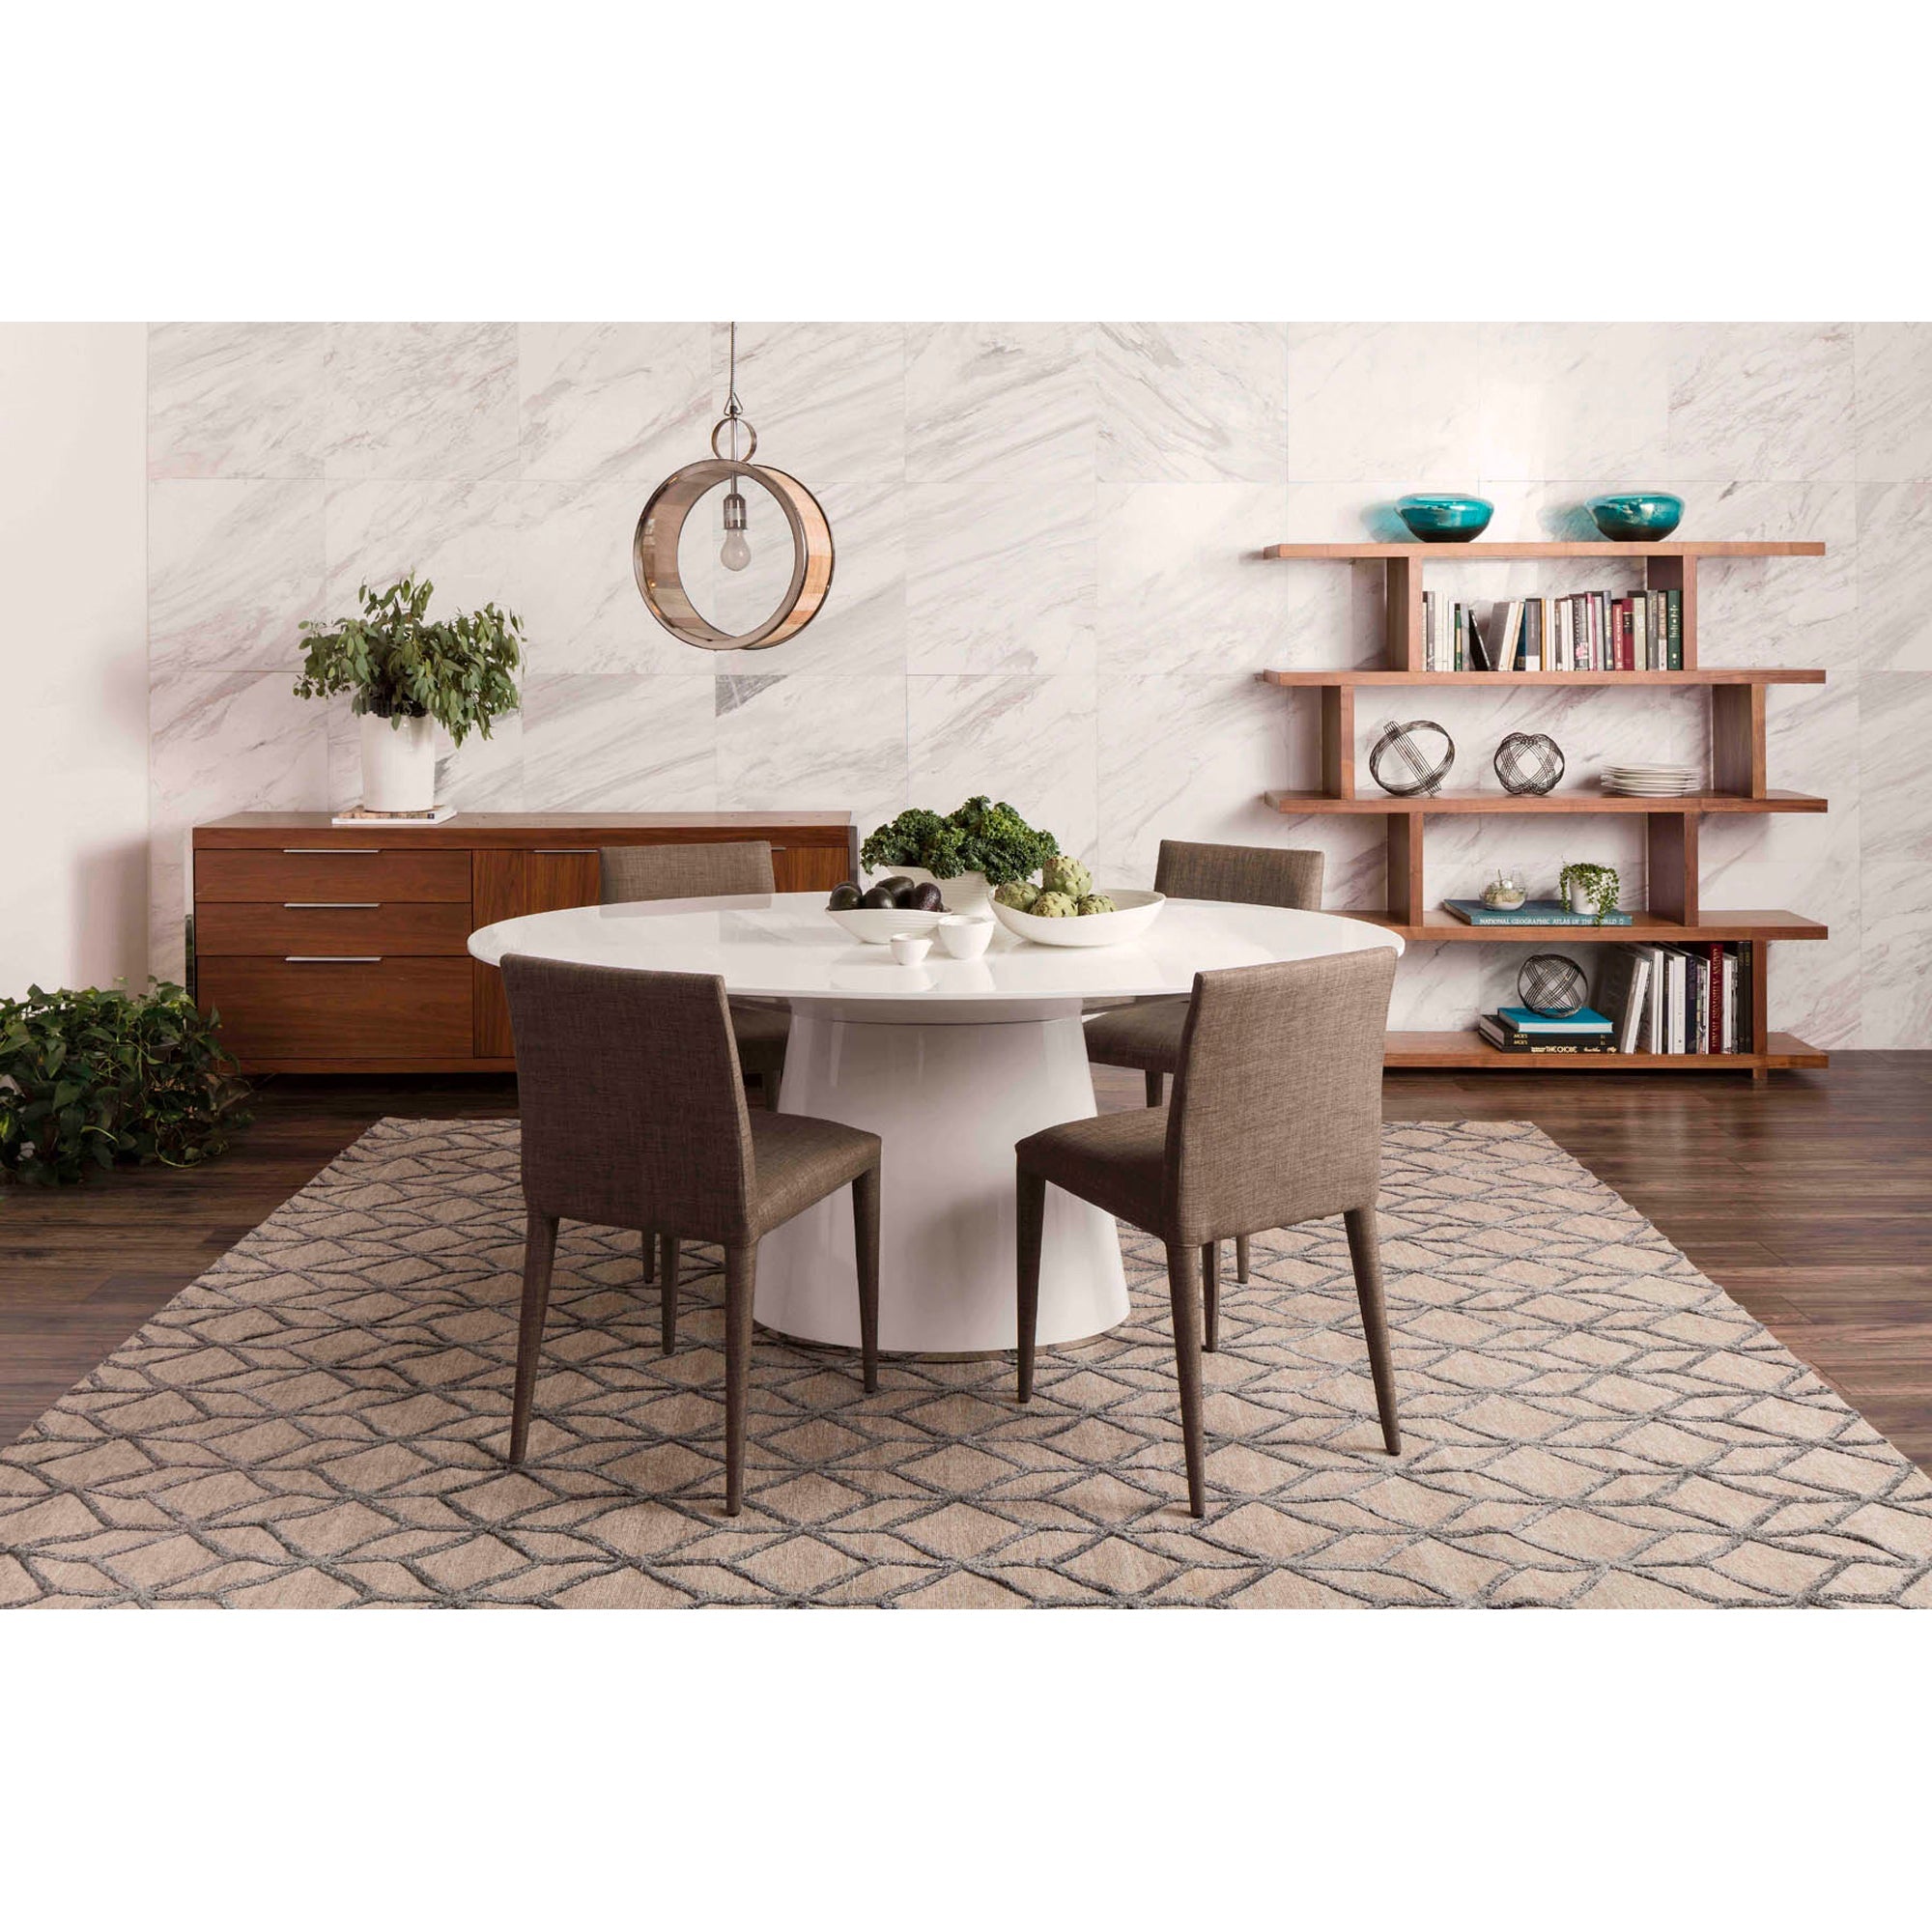 Miri Shelf Large - Brown - - Furniture - Tipplergoods